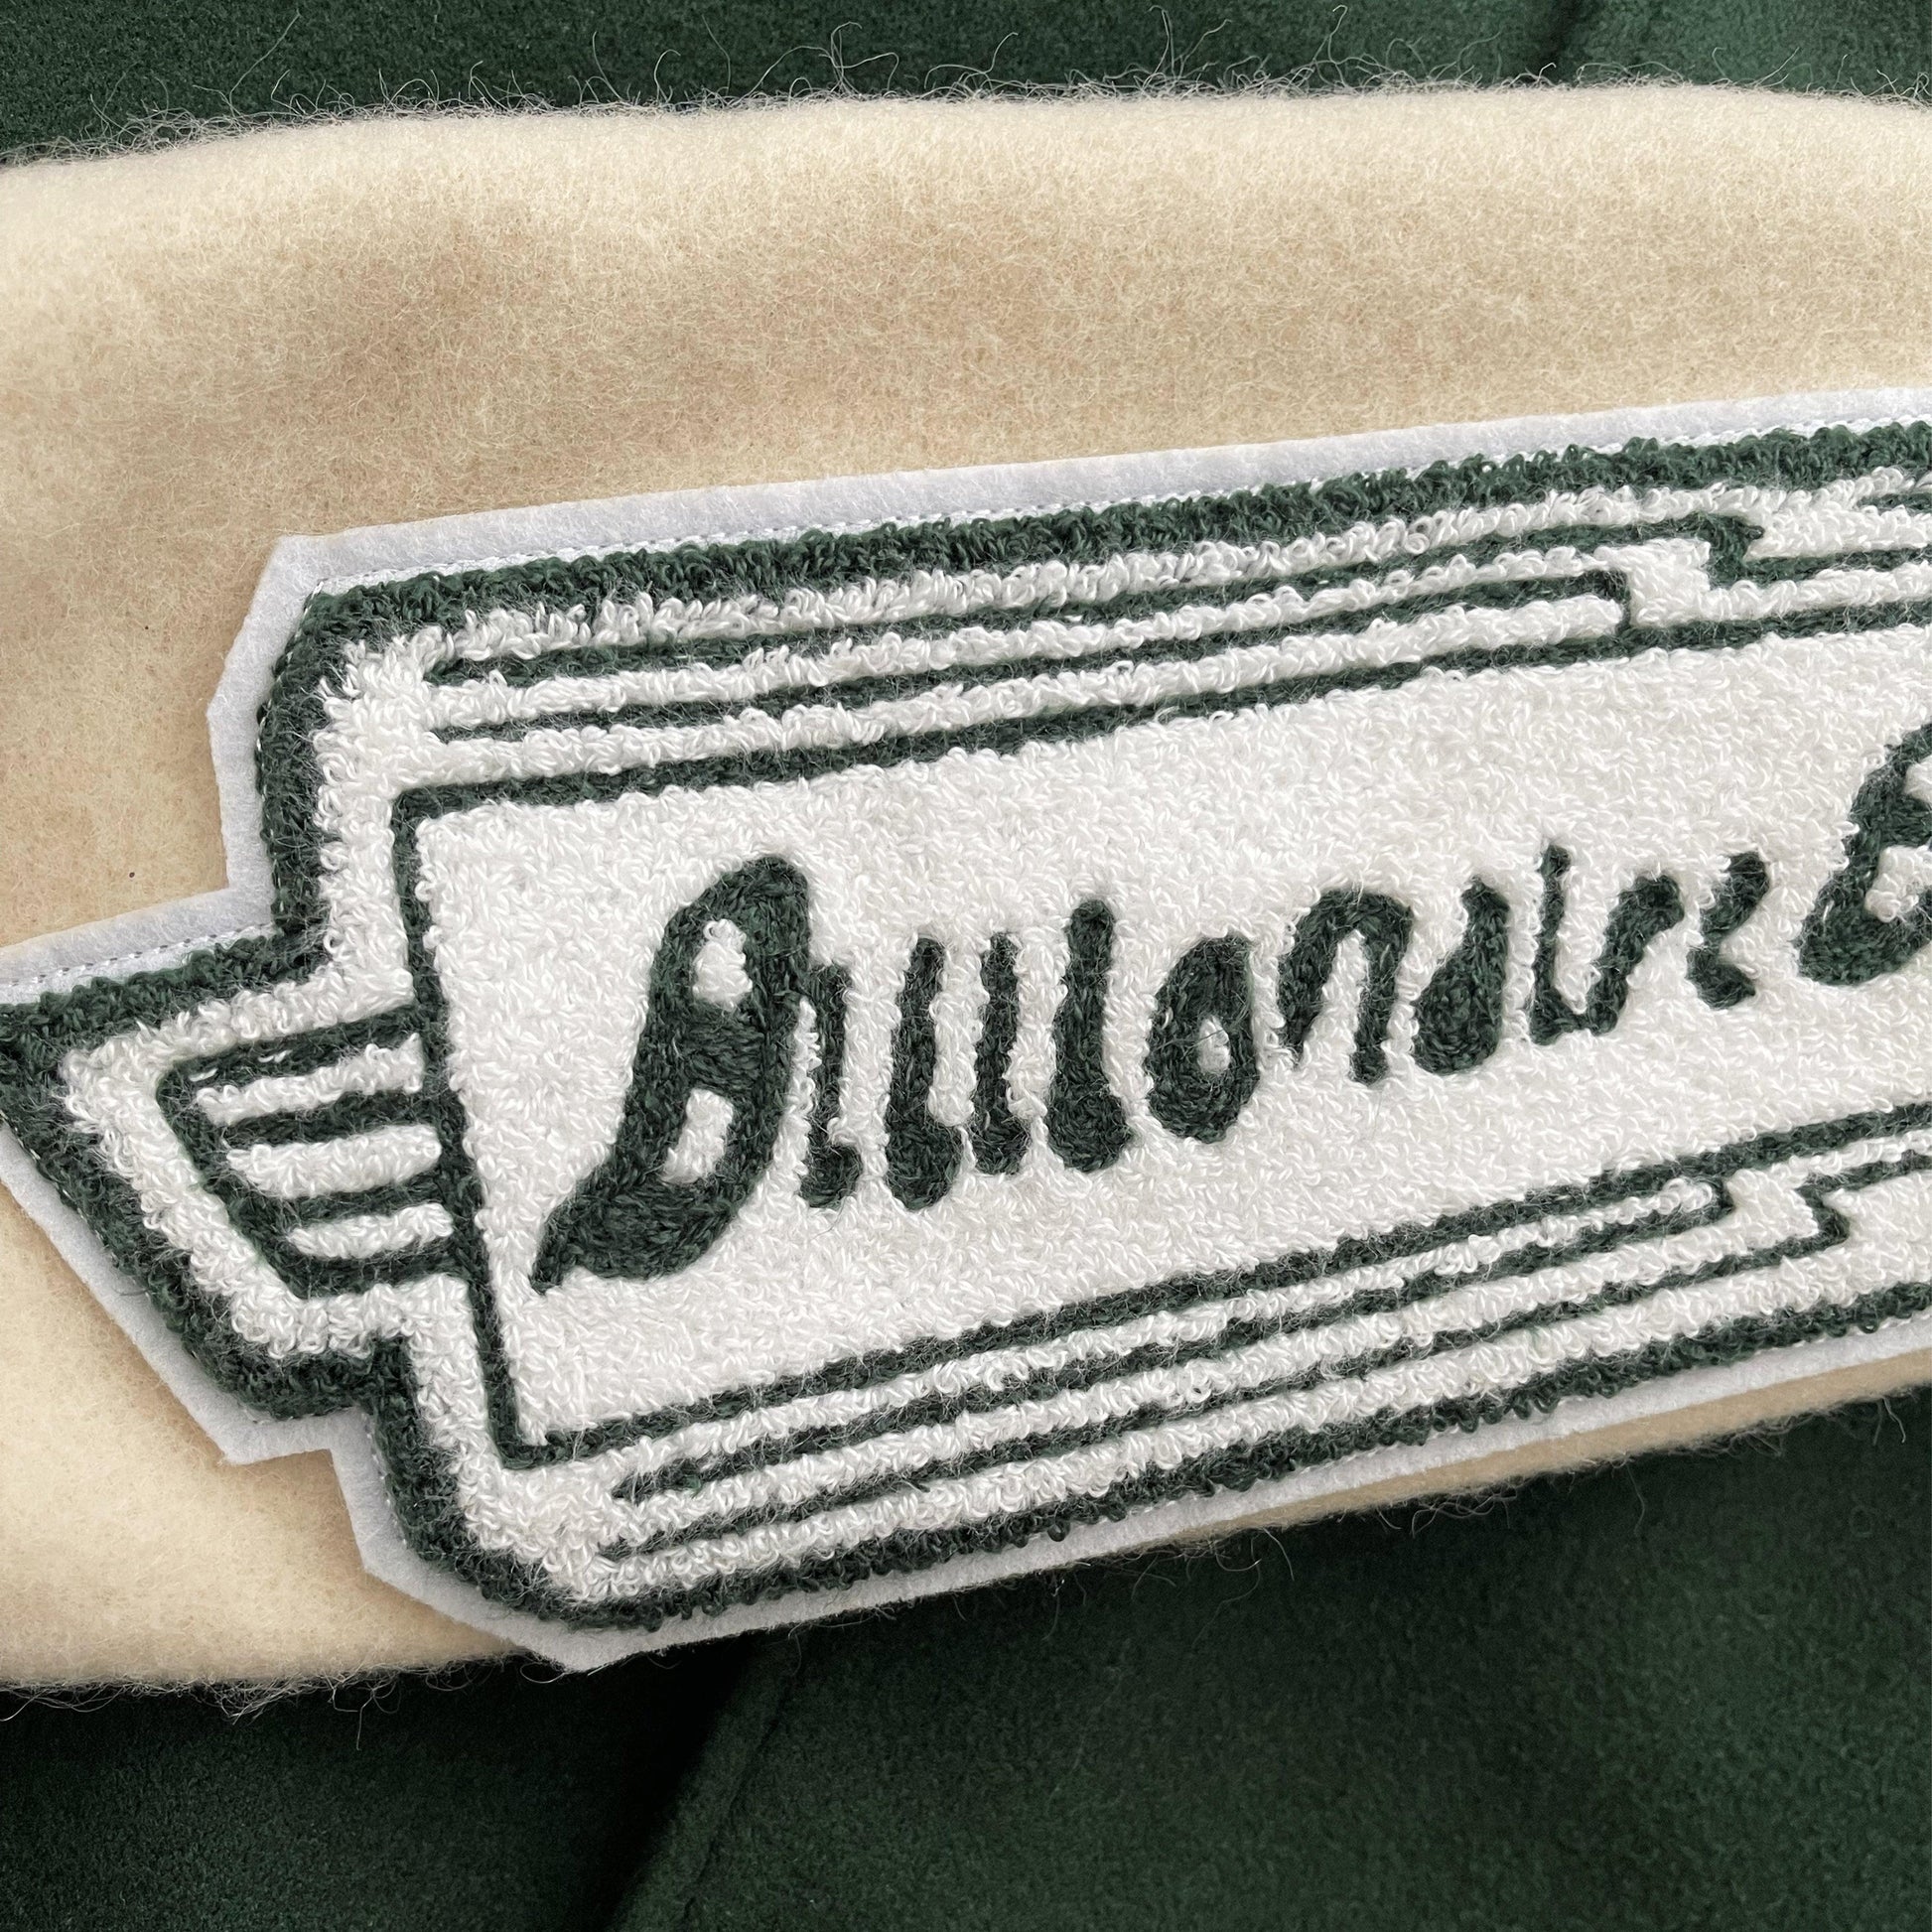 Billionaire Boys Club Varsity Jacket - Known Source